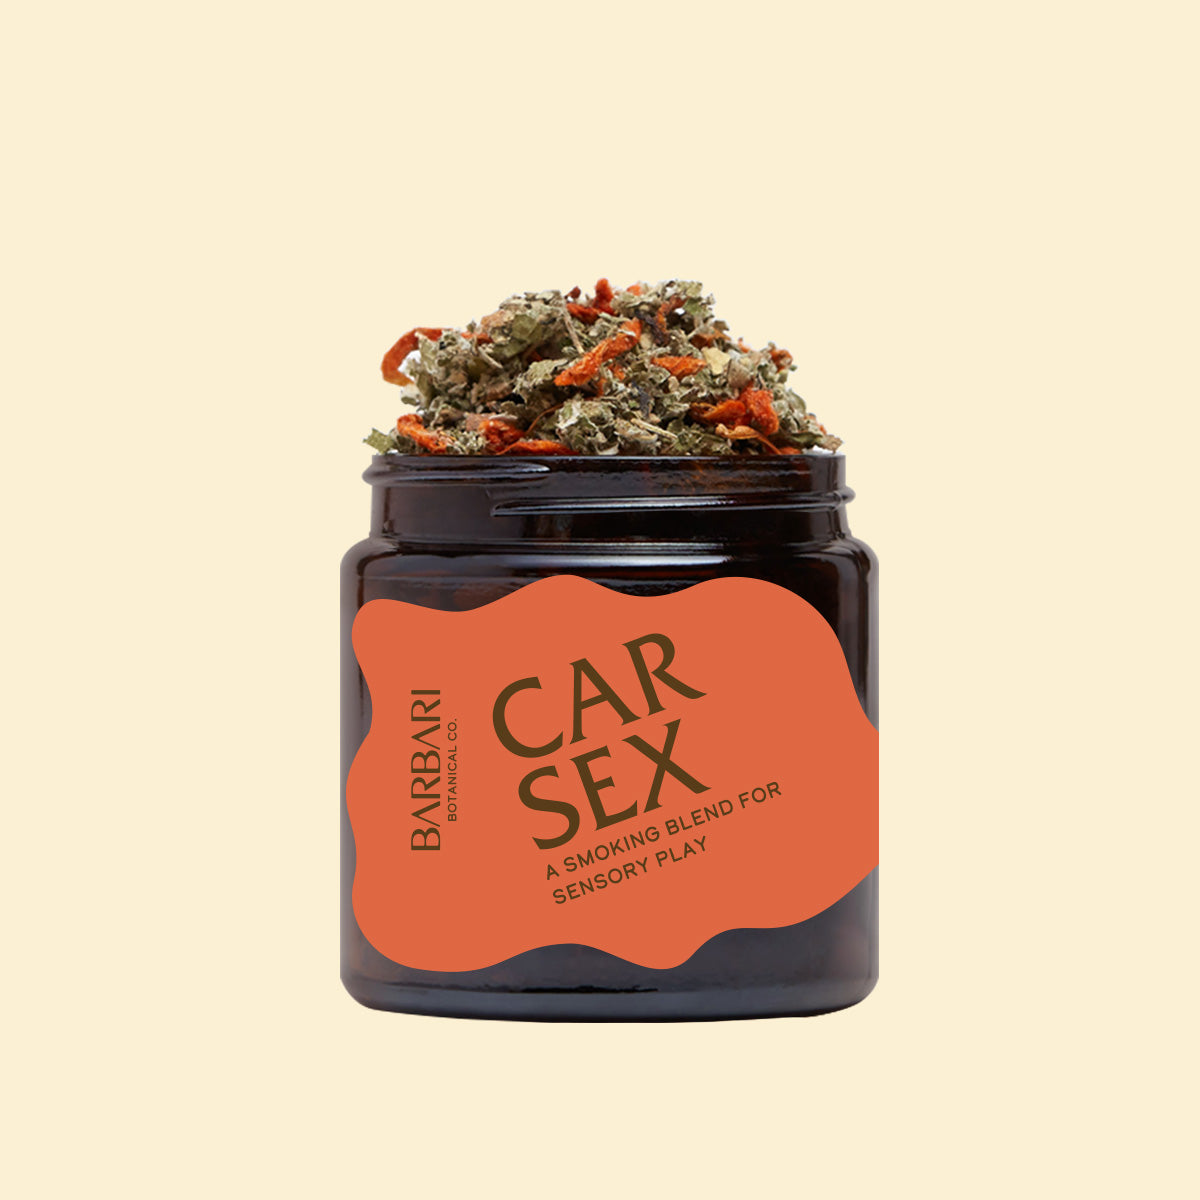 Car Sex Herbal Blend